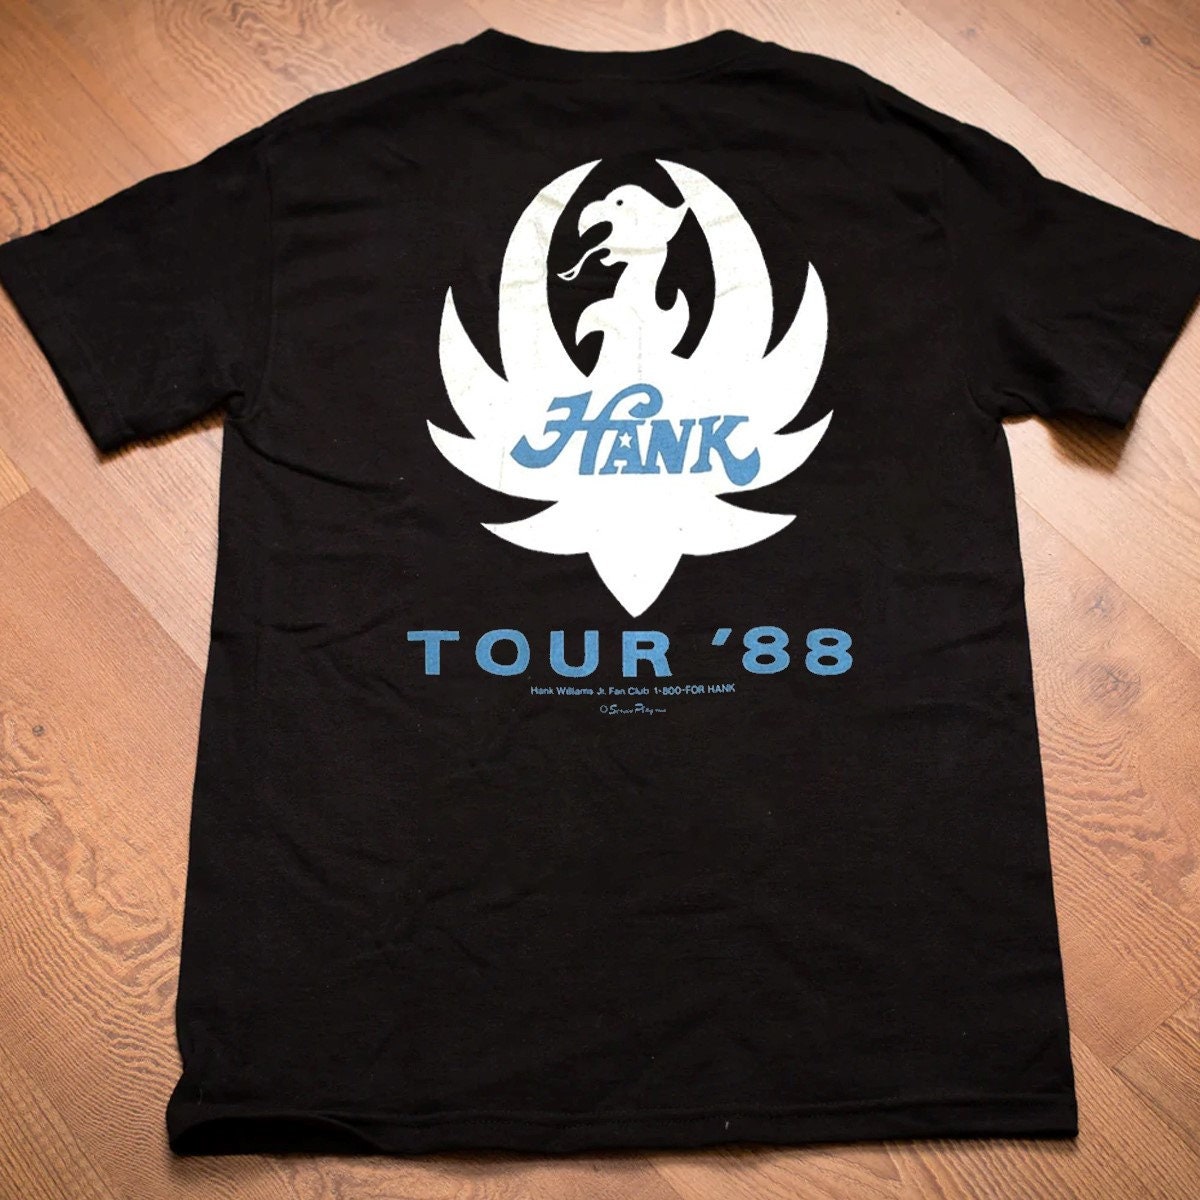 Hank Williams Jr 1988 Bocephus Wild Streak Tour 88 T-Shirt